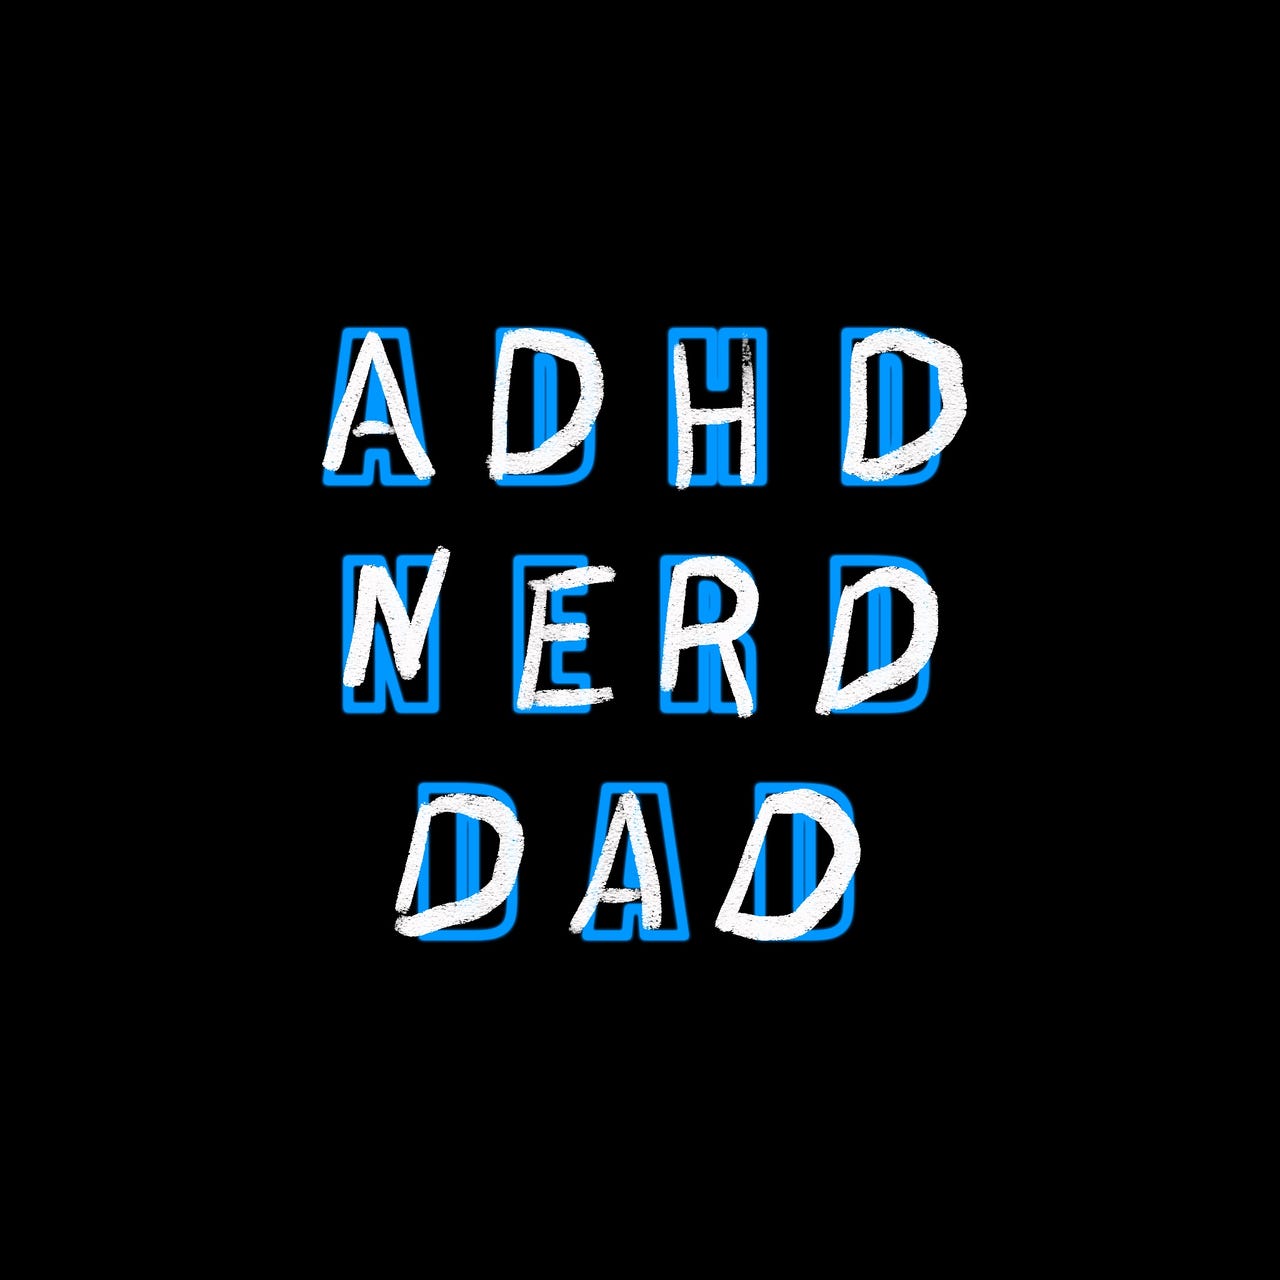 ADHDNerdDad’s Substack